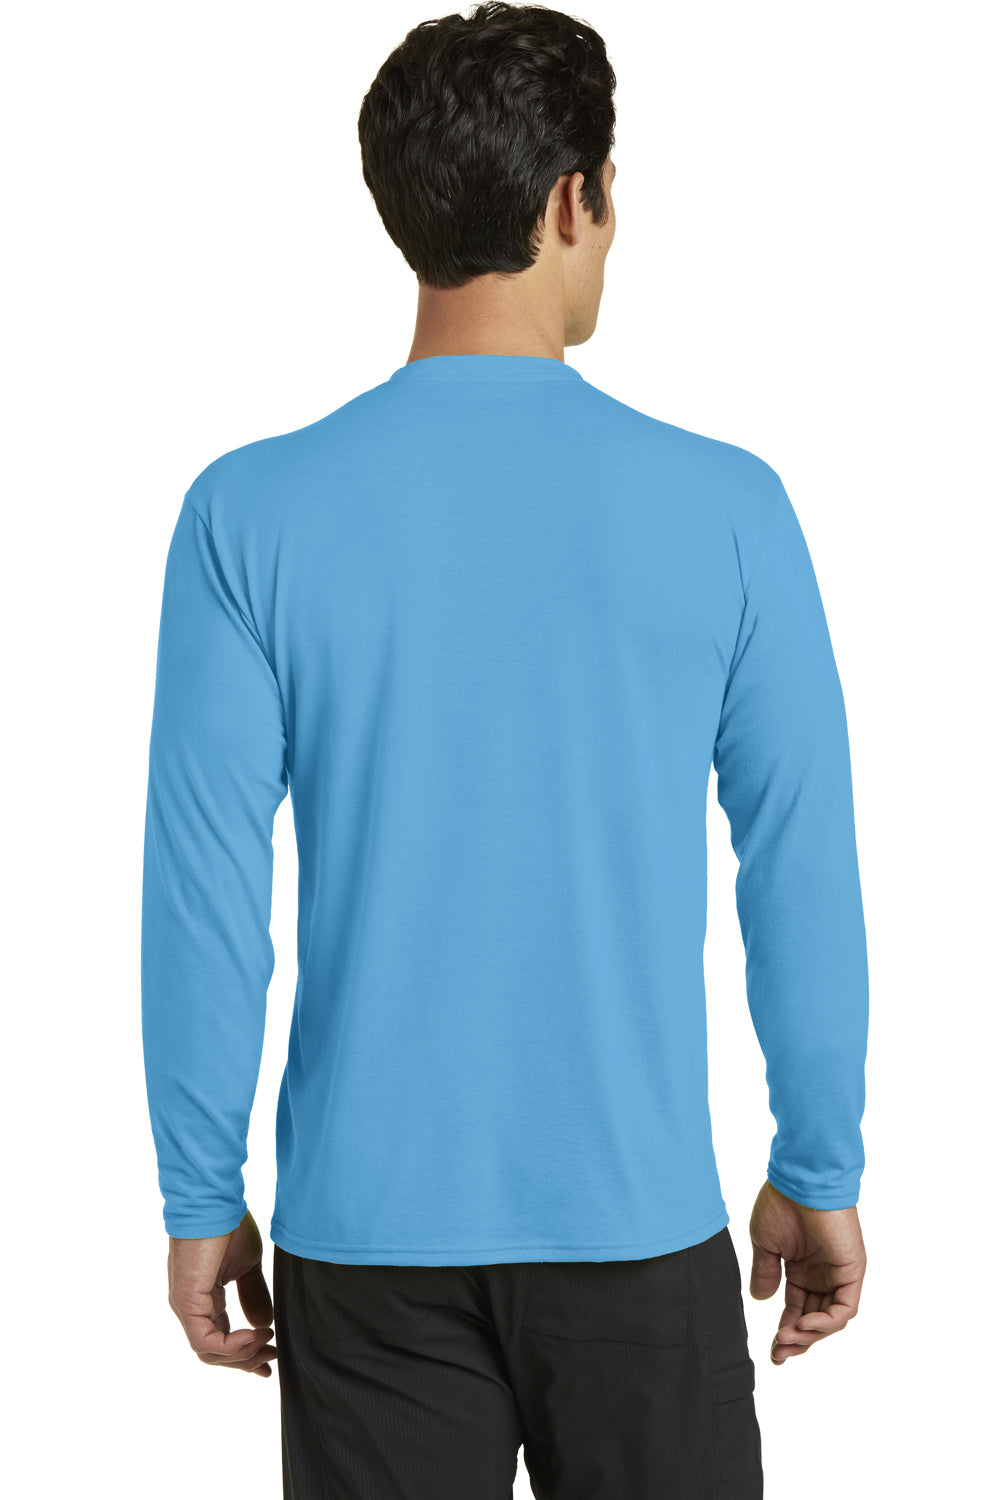 Port & Company PC381LS Mens Dry Zone Performance Moisture Wicking Long Sleeve Crewneck T-Shirt Aqua Blue Back